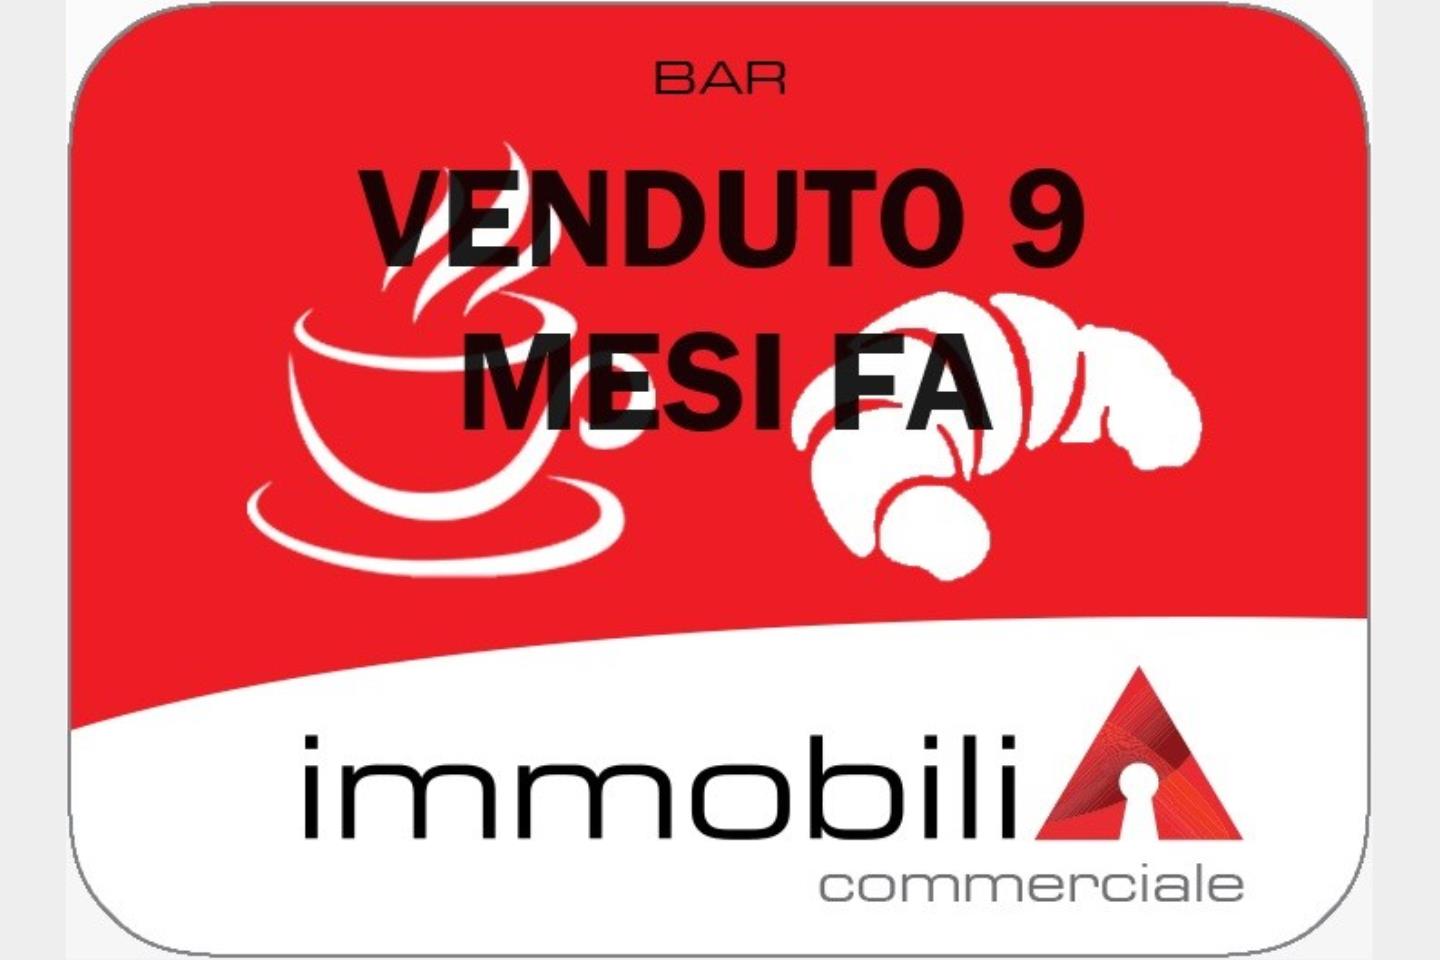 Bar Tavola Fredda in Vendita Monza